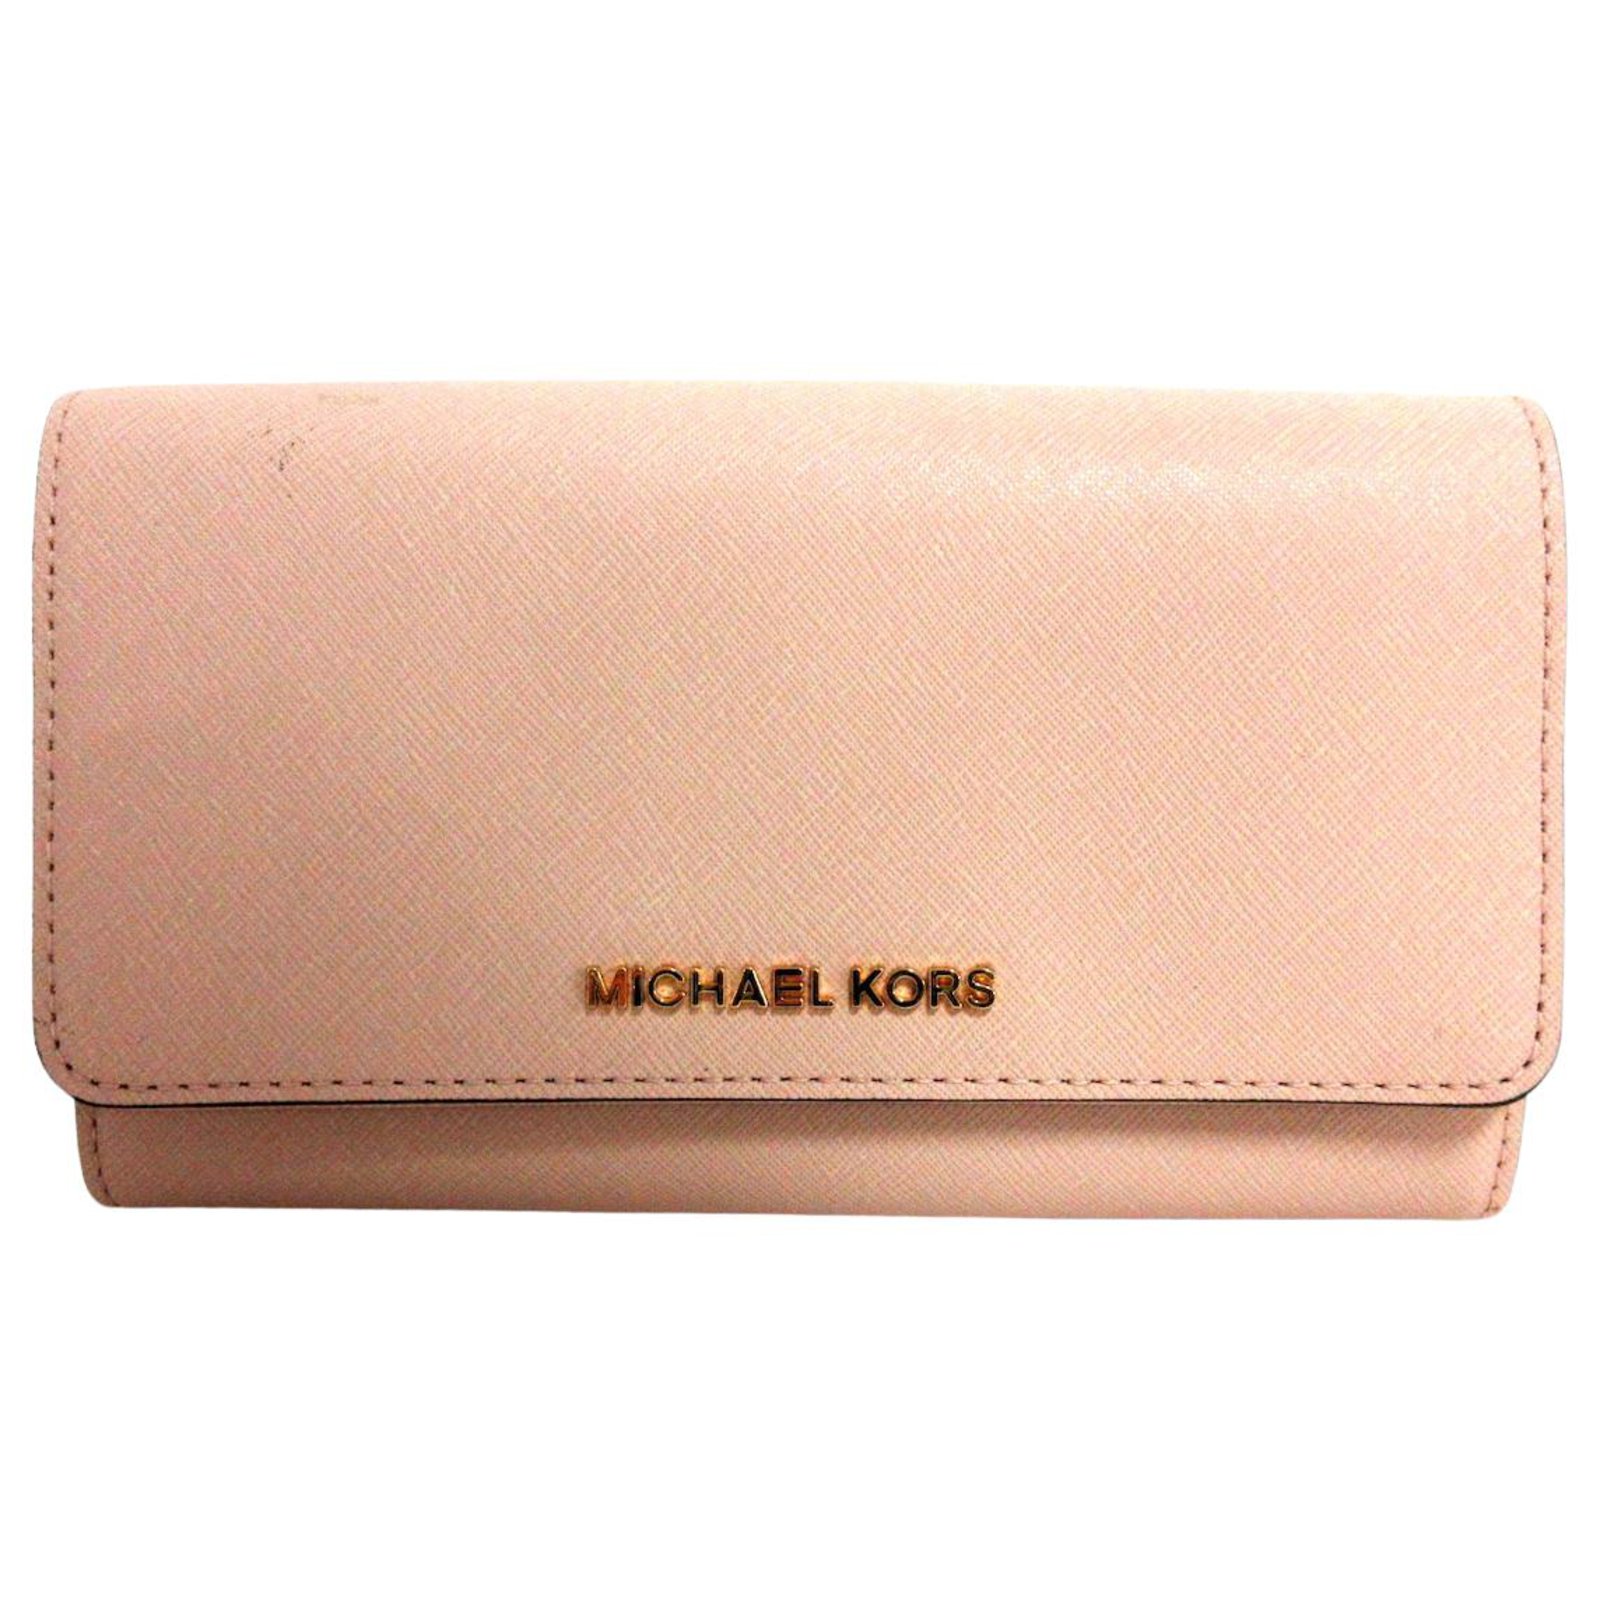 Michael Kors Wallet🎈🎈 | Micheal kors wallet, Mk wallet, Michael kors  wallet